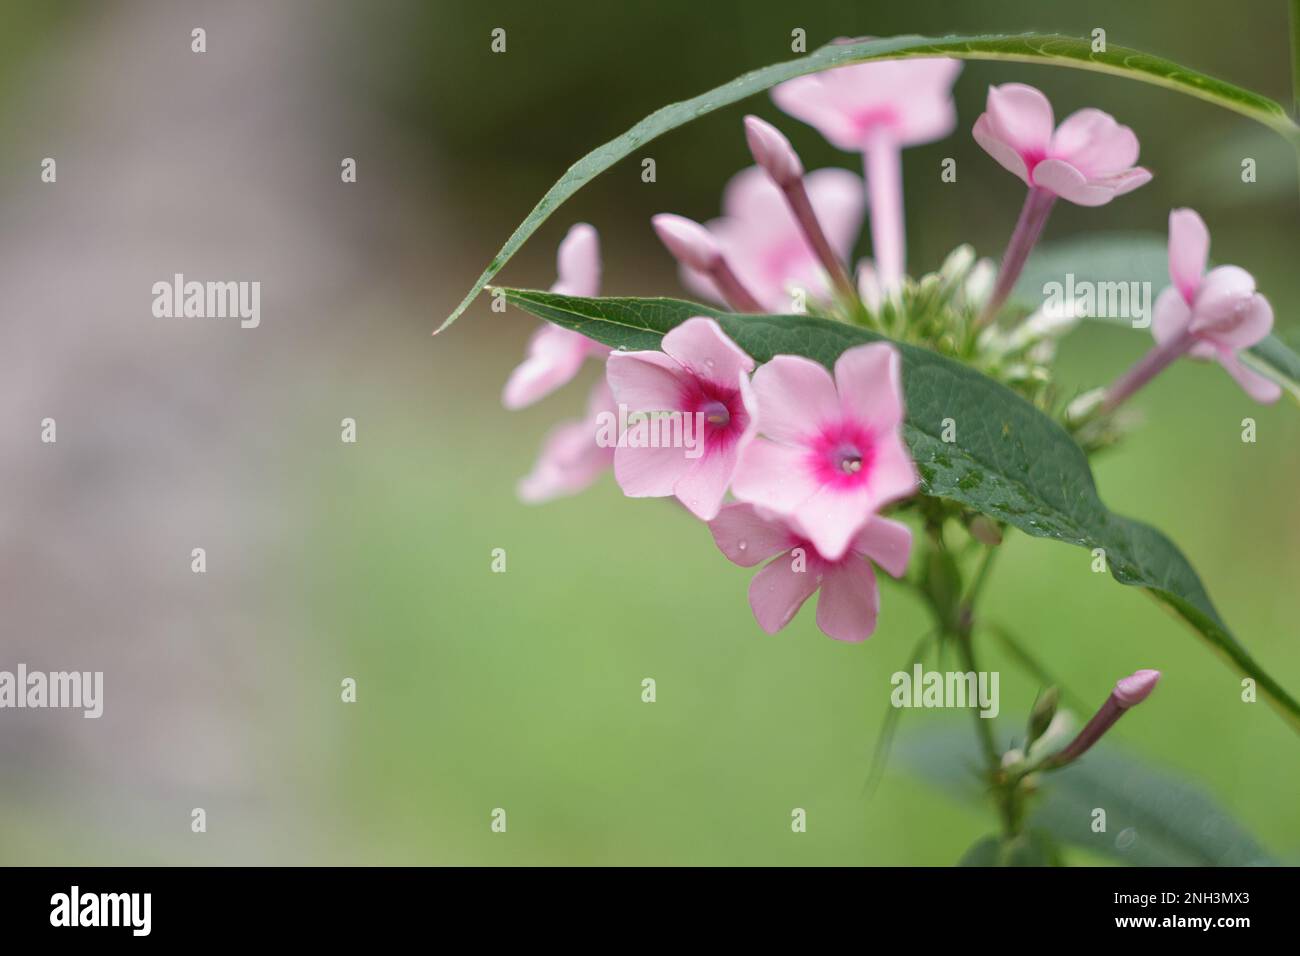 Pink phlox flowers in a garden Stock Photo